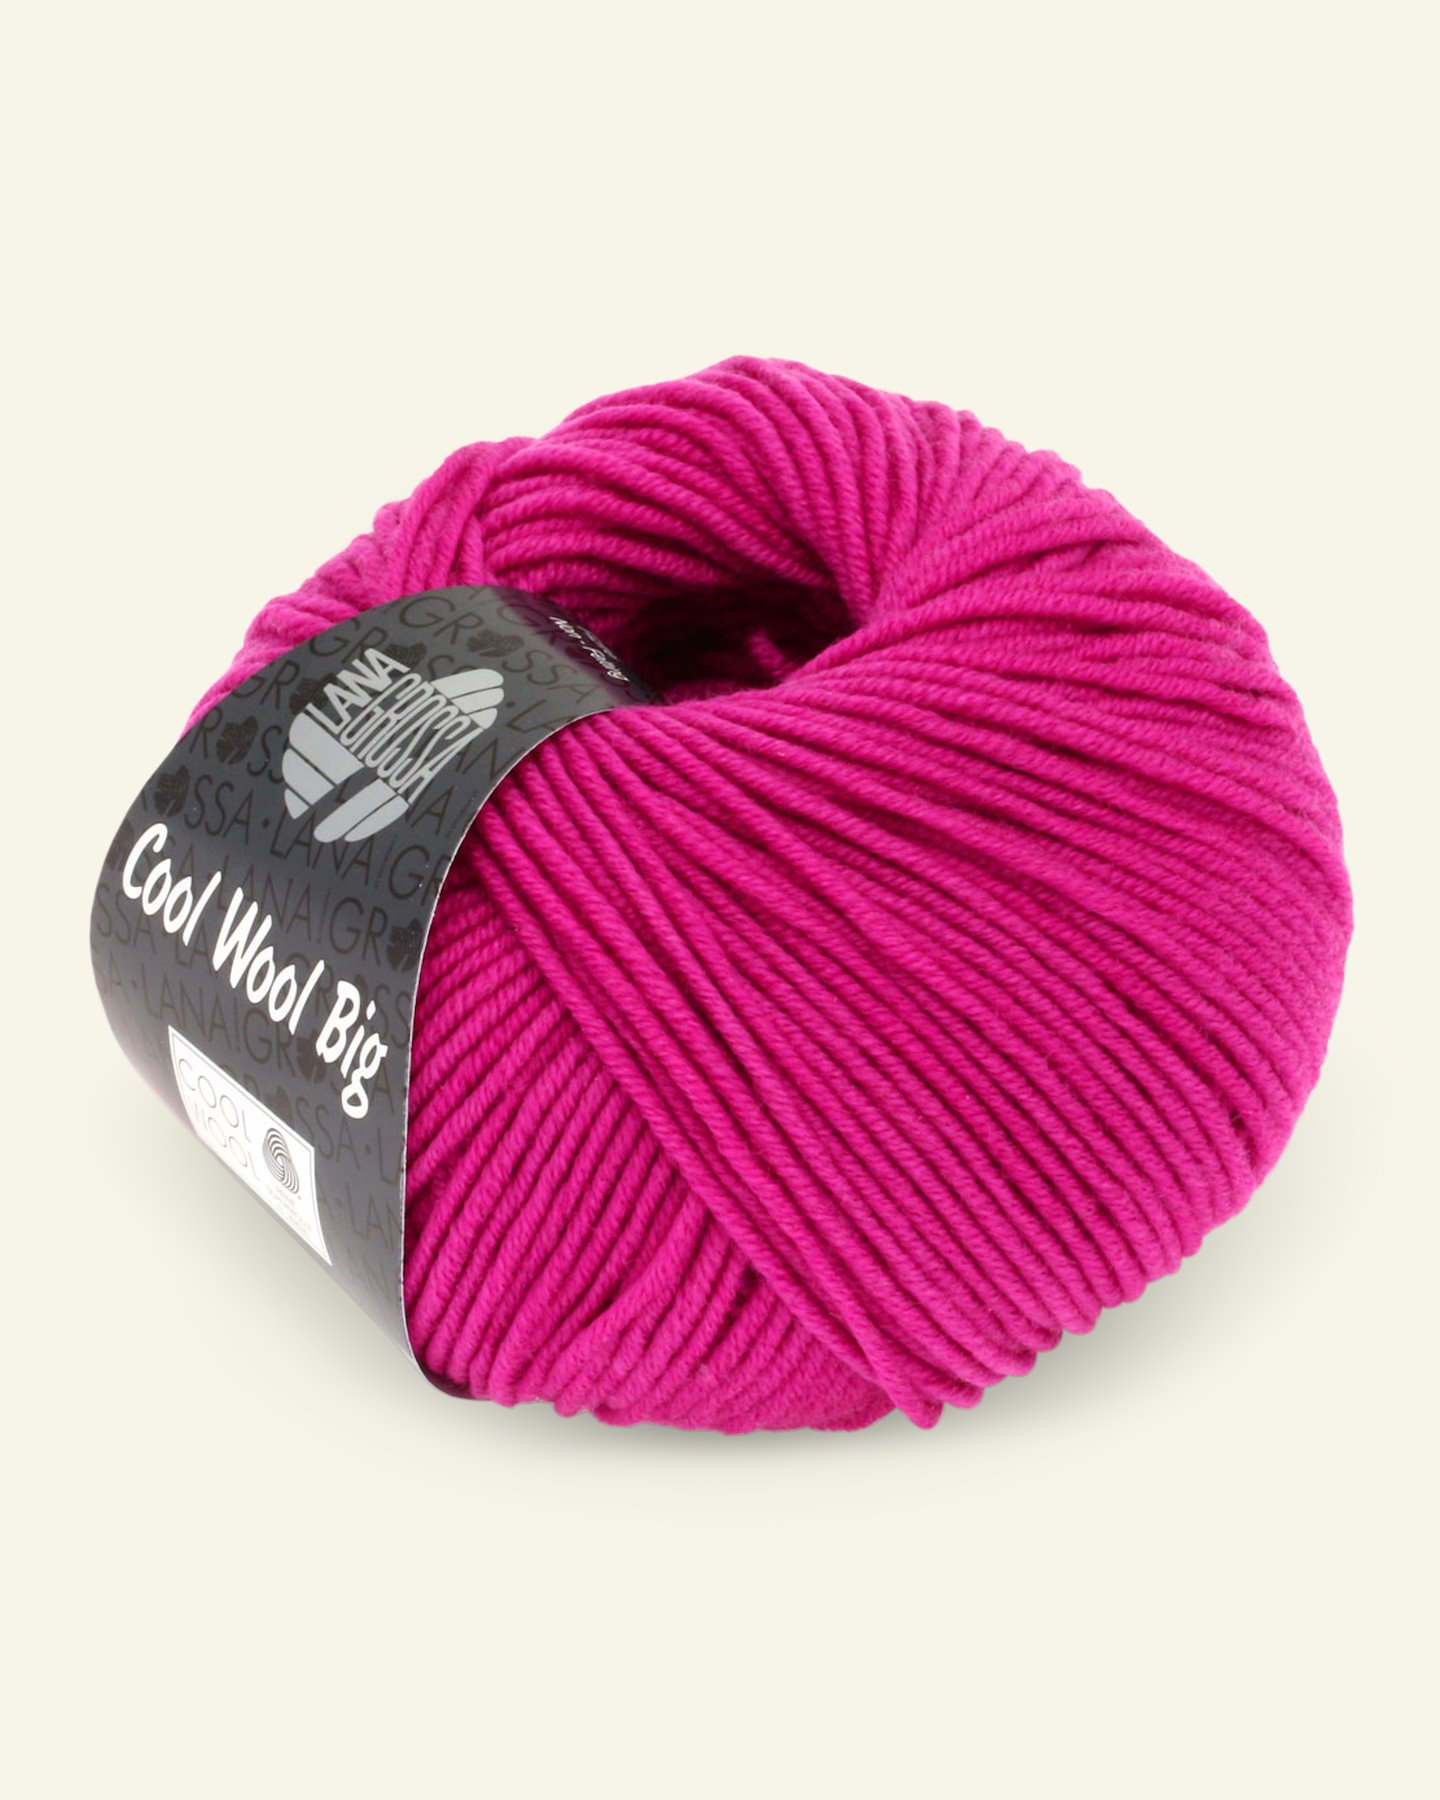 Lana Grossa, Extra feine Merinowolle Garn "Cool Wool Big", Zyklam 90001101_pack